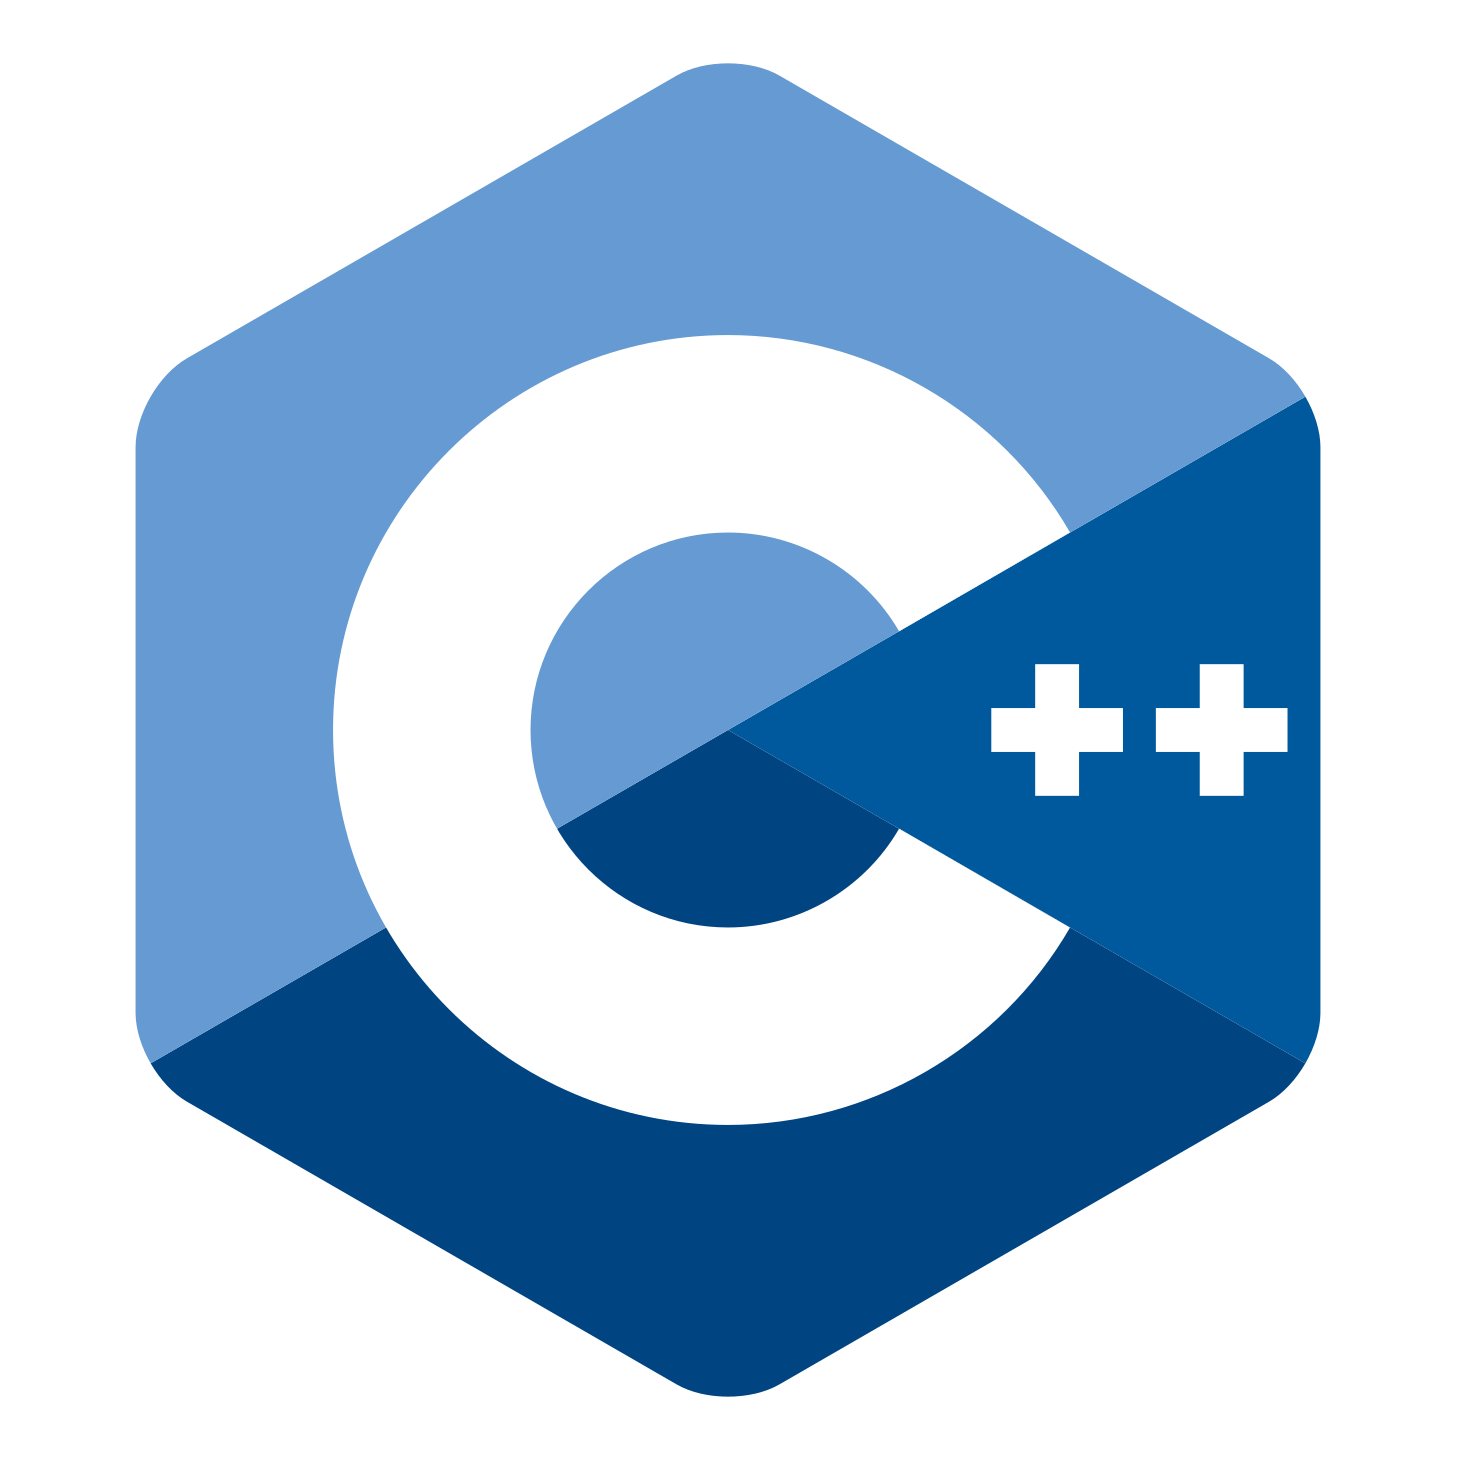 C/C++ logo - Bluebird